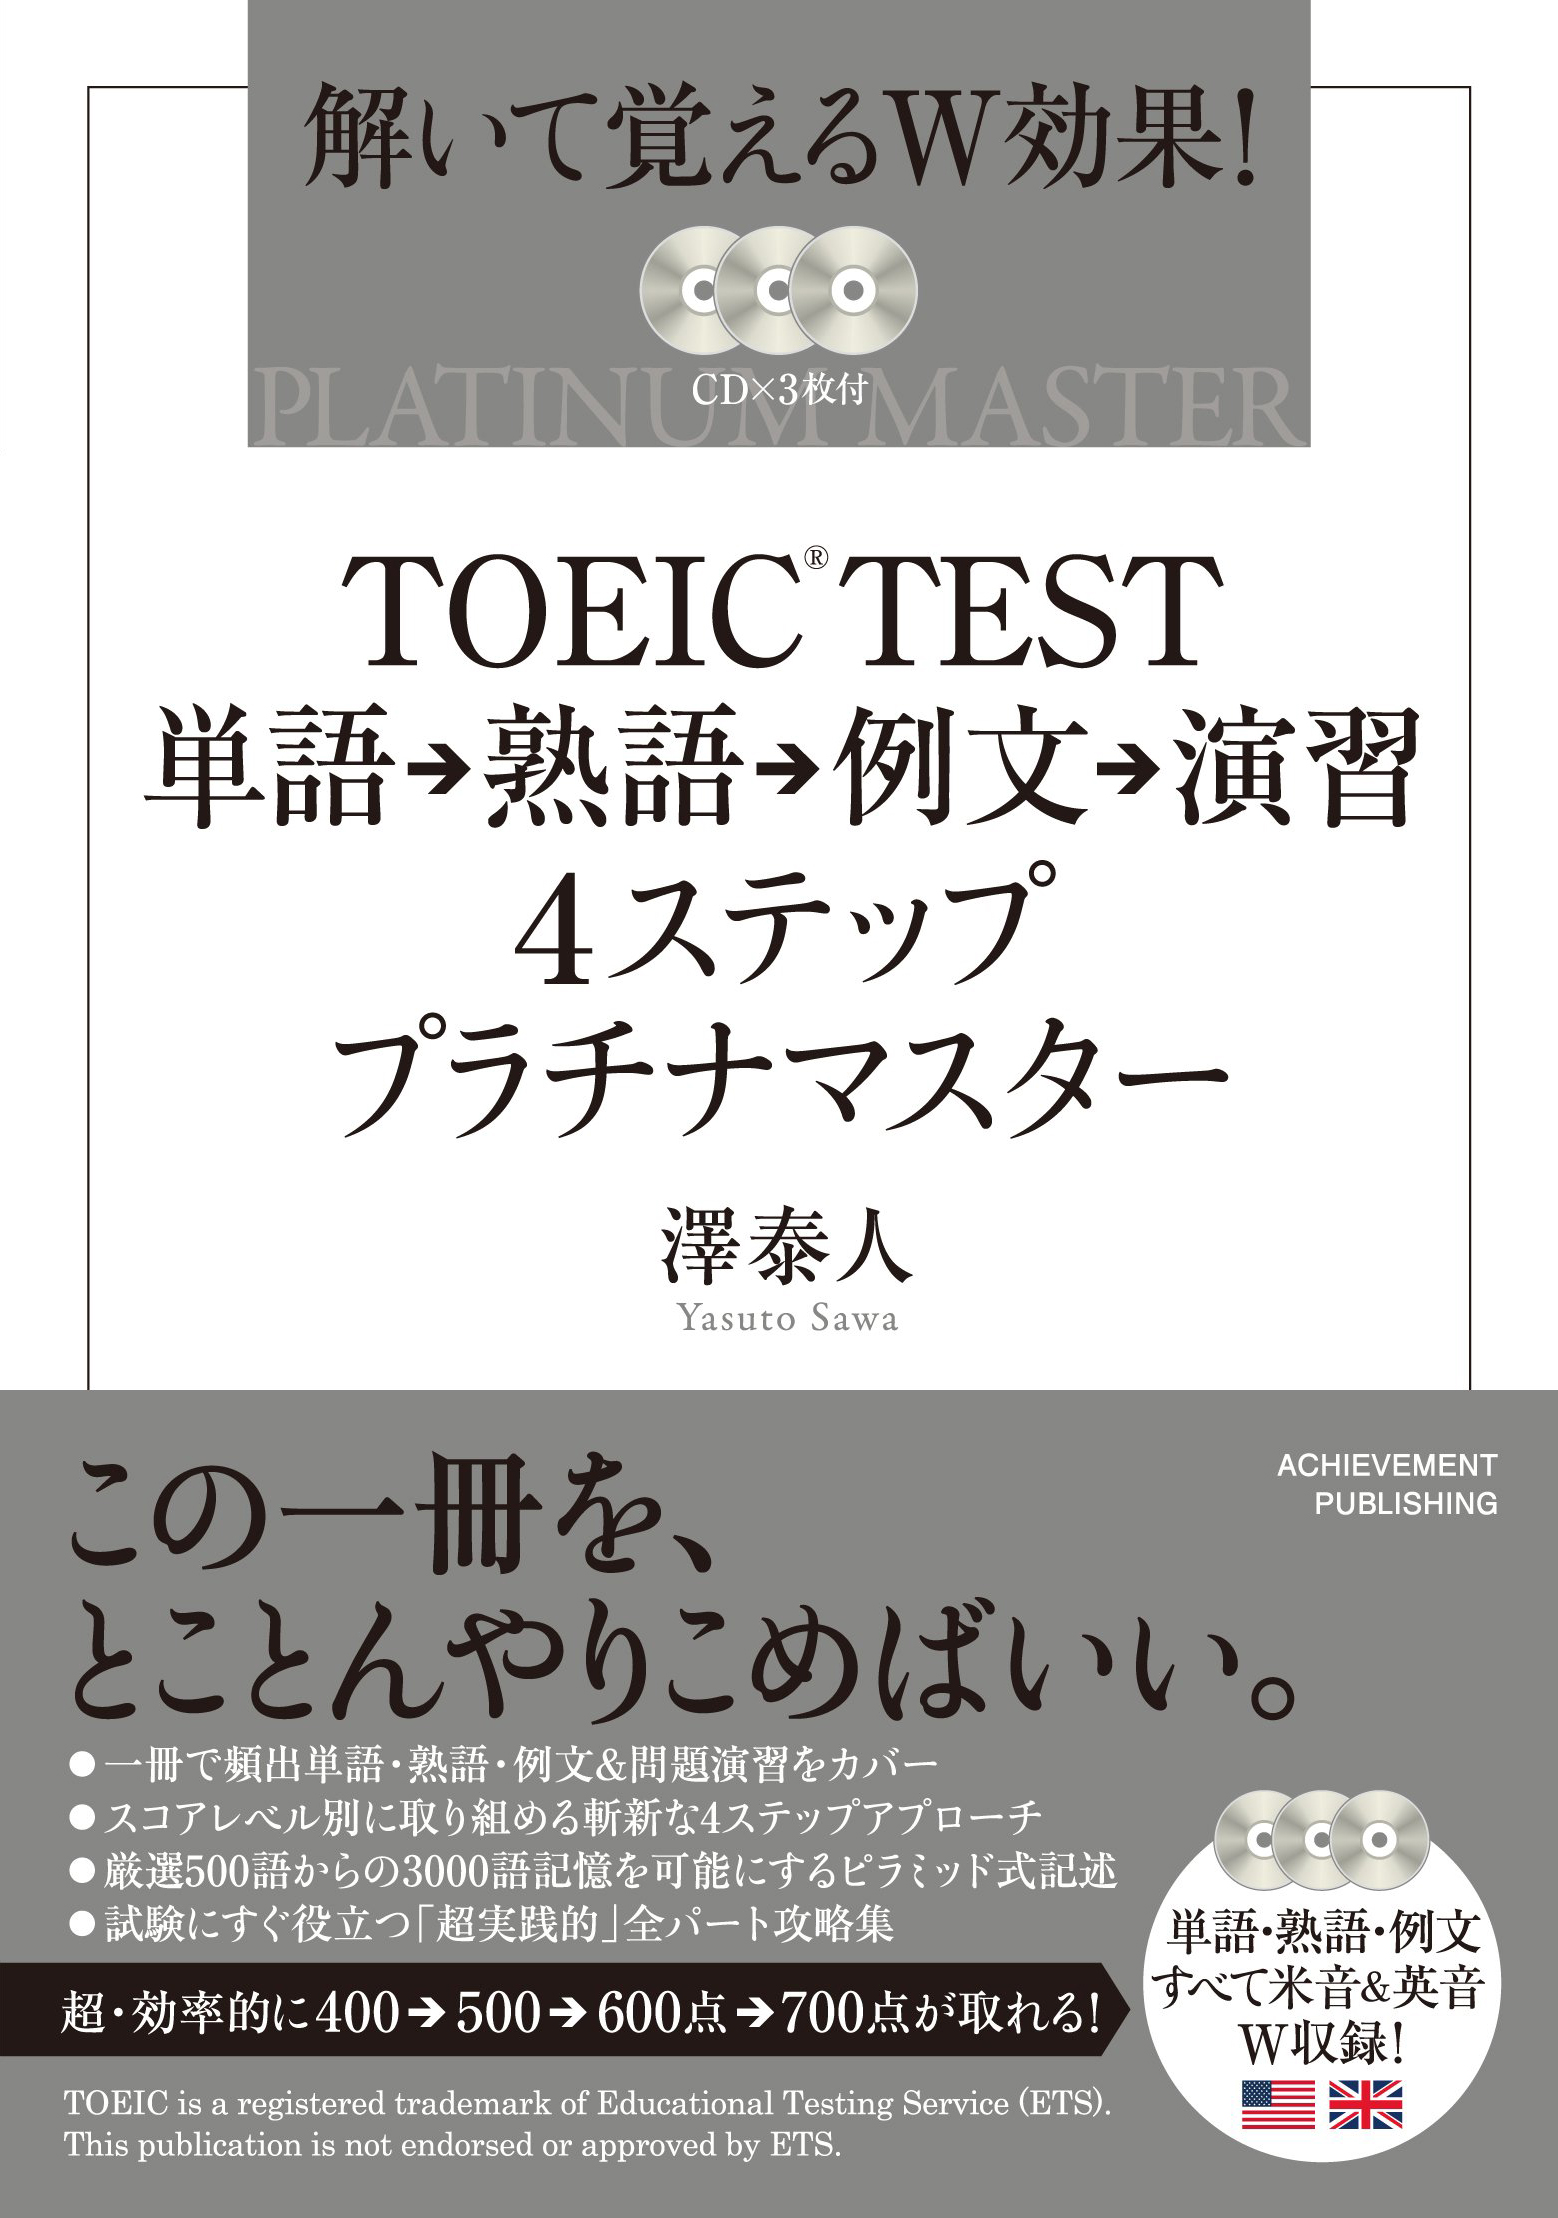 TOEIC&TEST 単語→熟語→例文→演習 プラチナマスターの画像1